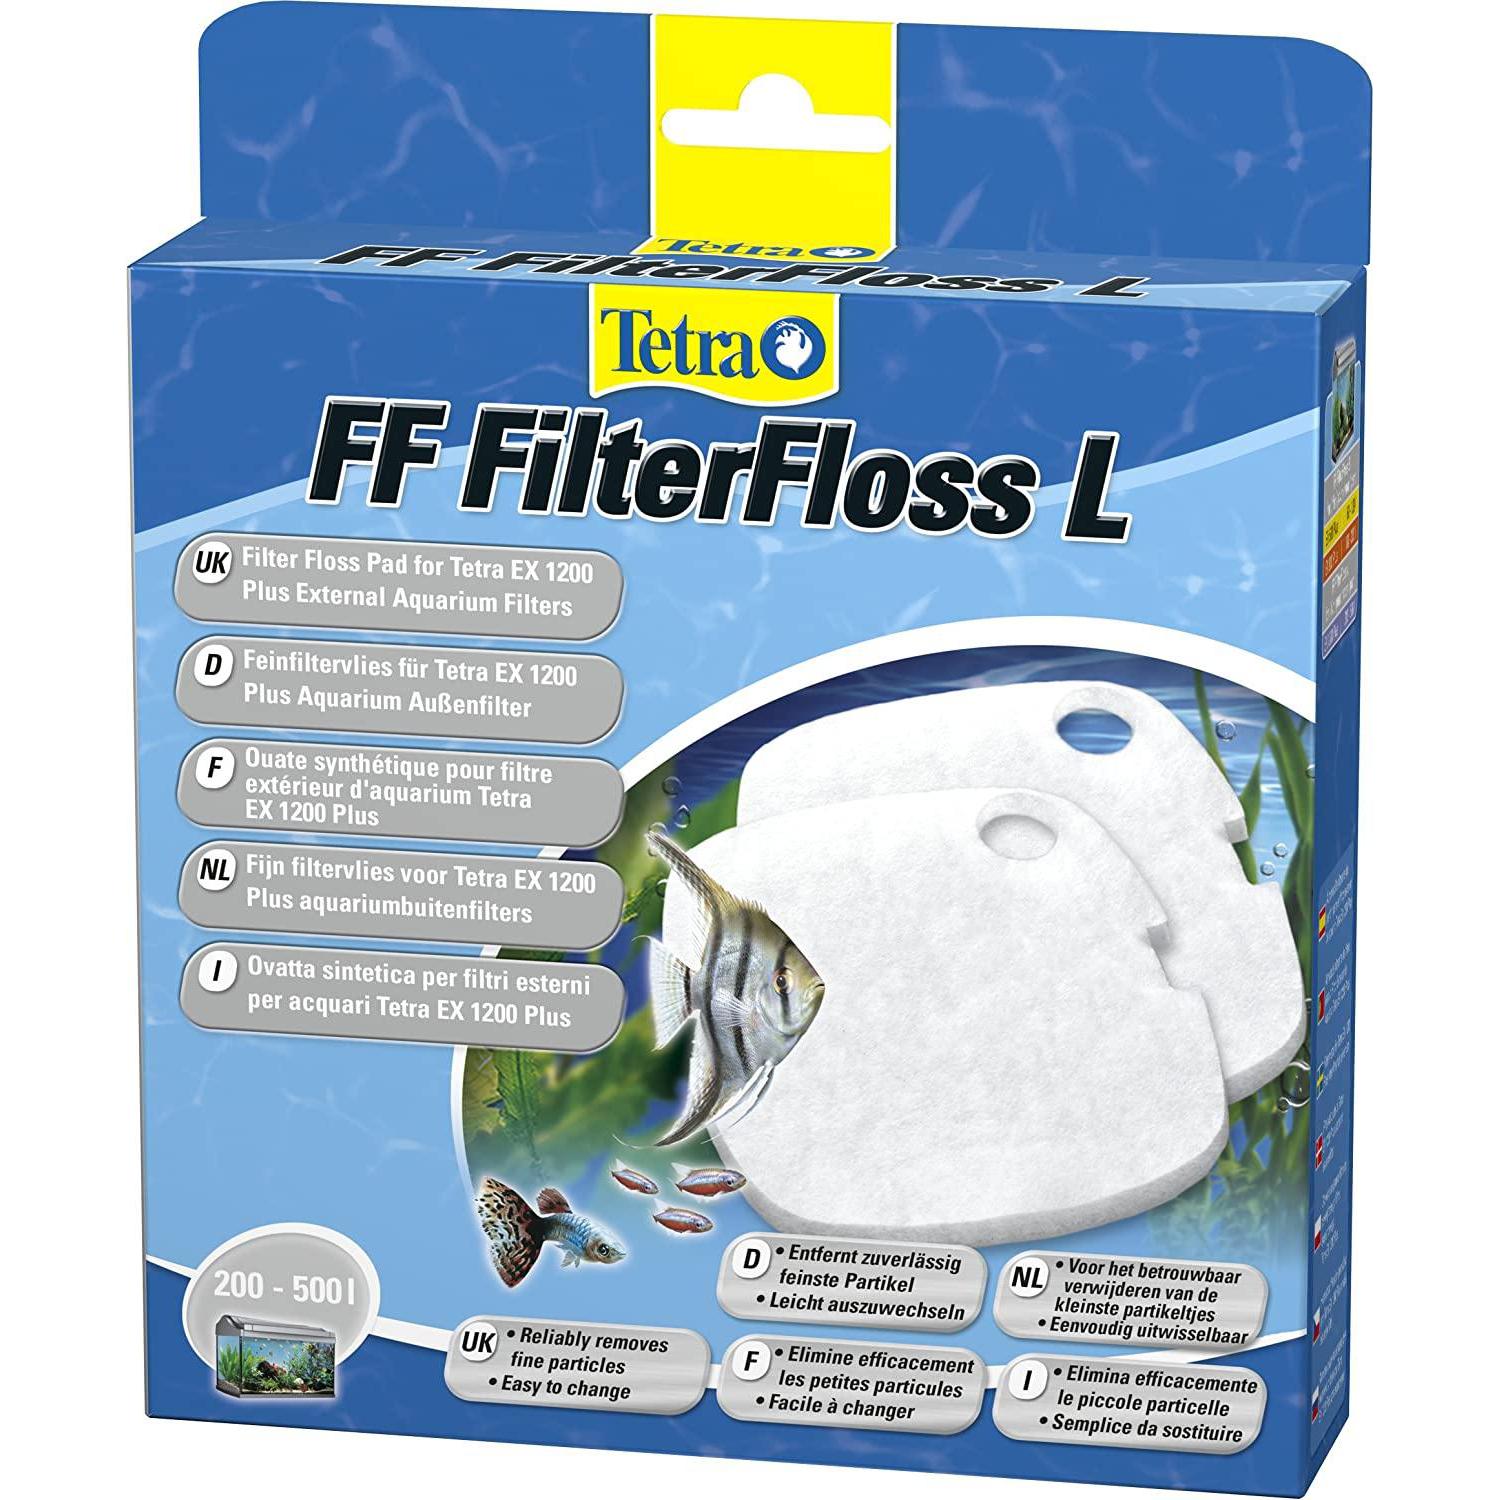 Tetra FF FilterFloss L per filtro esterno Tetra EX1200 e EX1200Plus